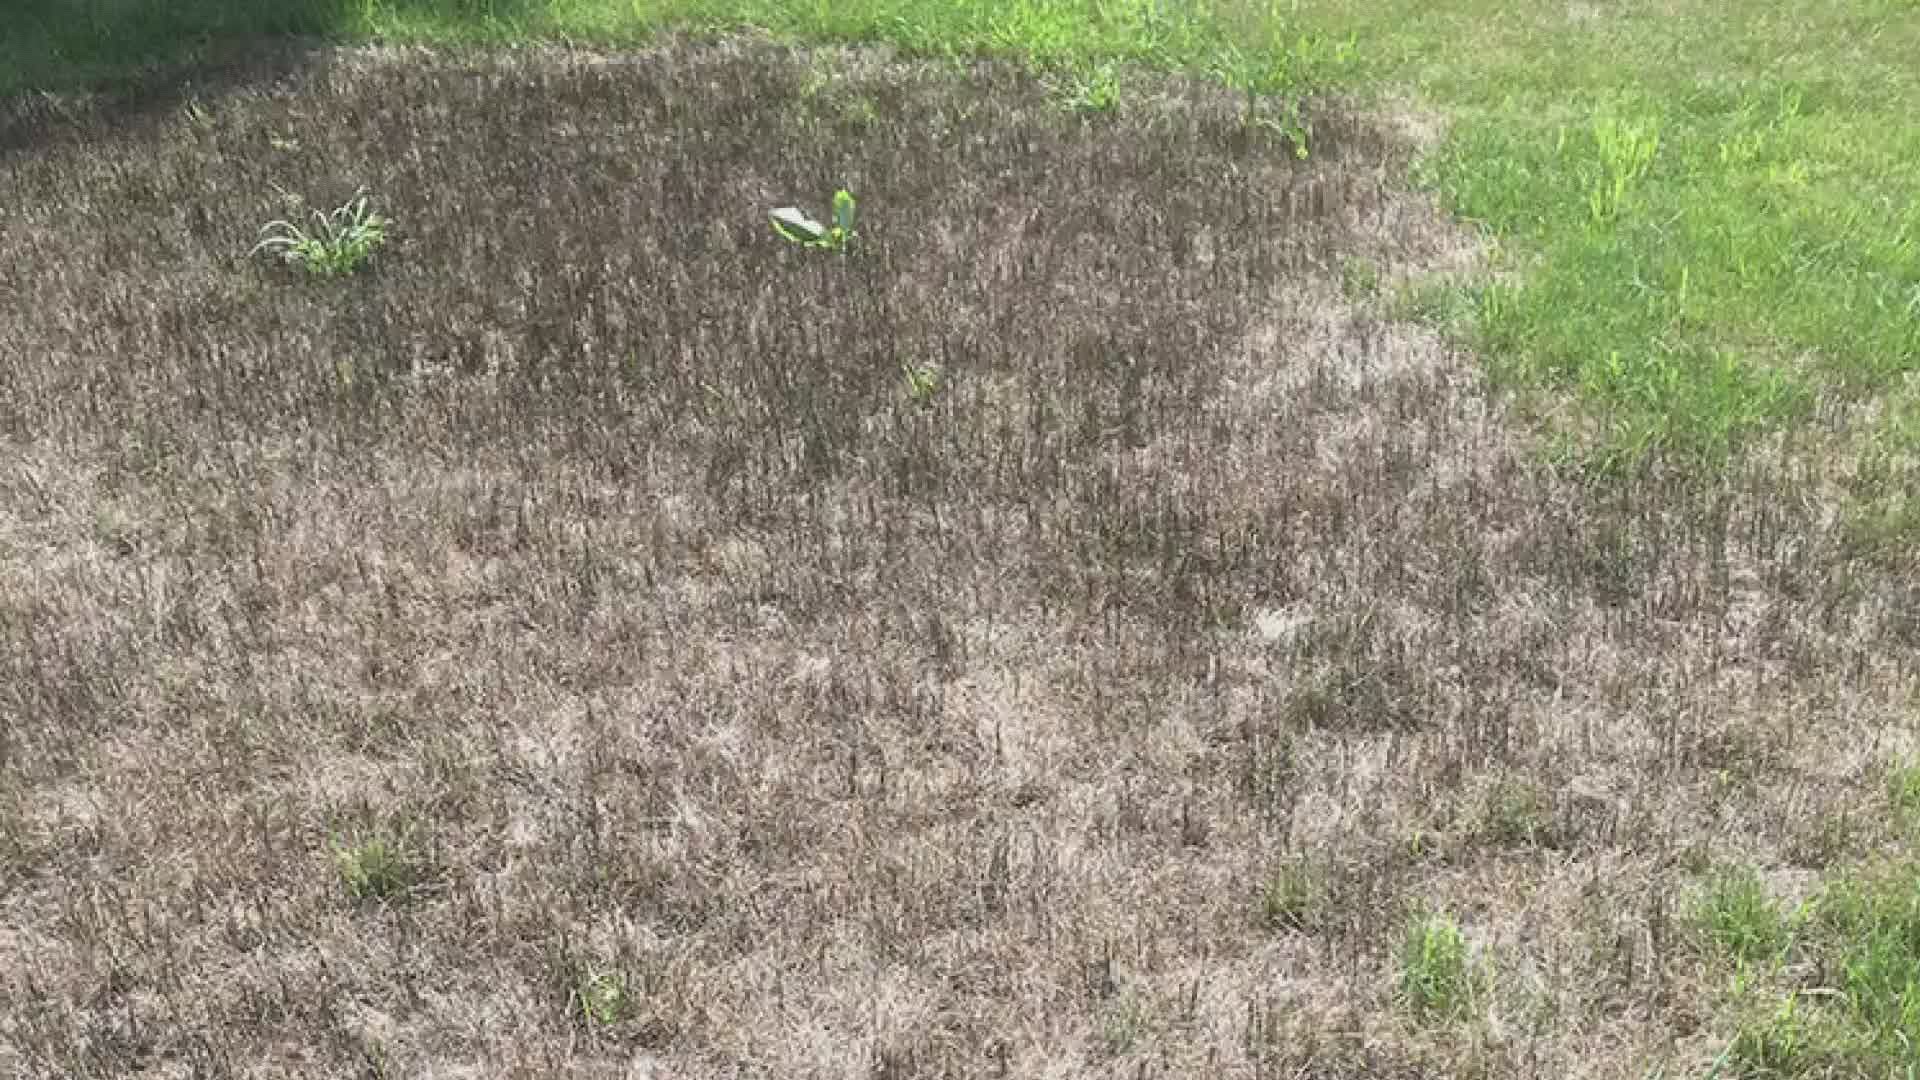 black mold on grass